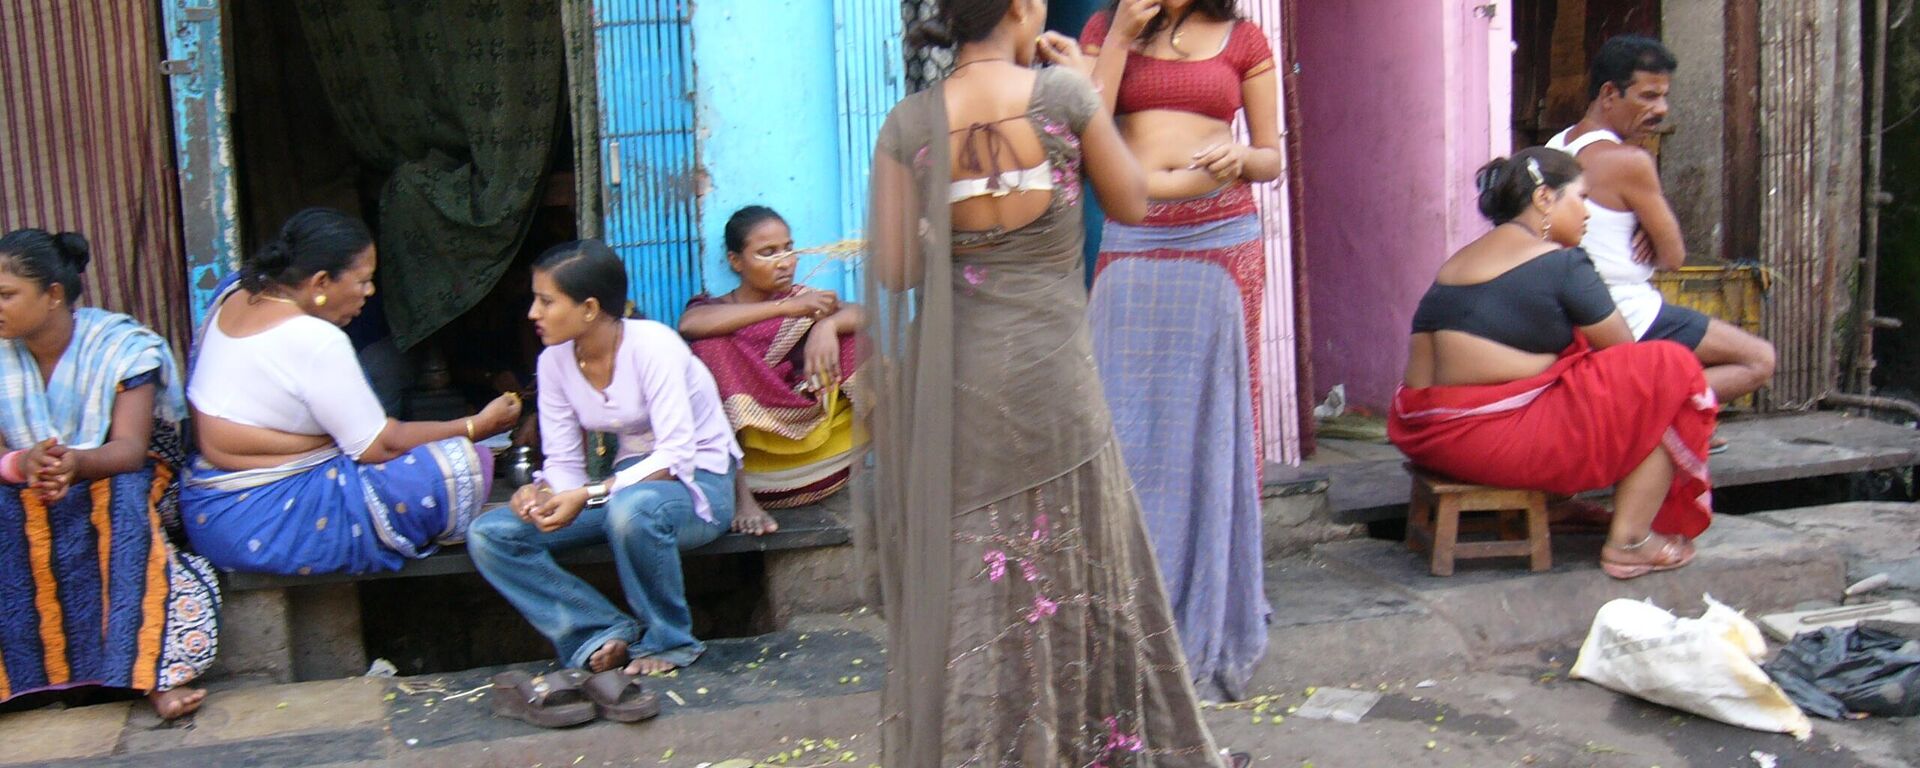 Prostitutes in Mumbai - Sputnik International, 1920, 27.05.2022